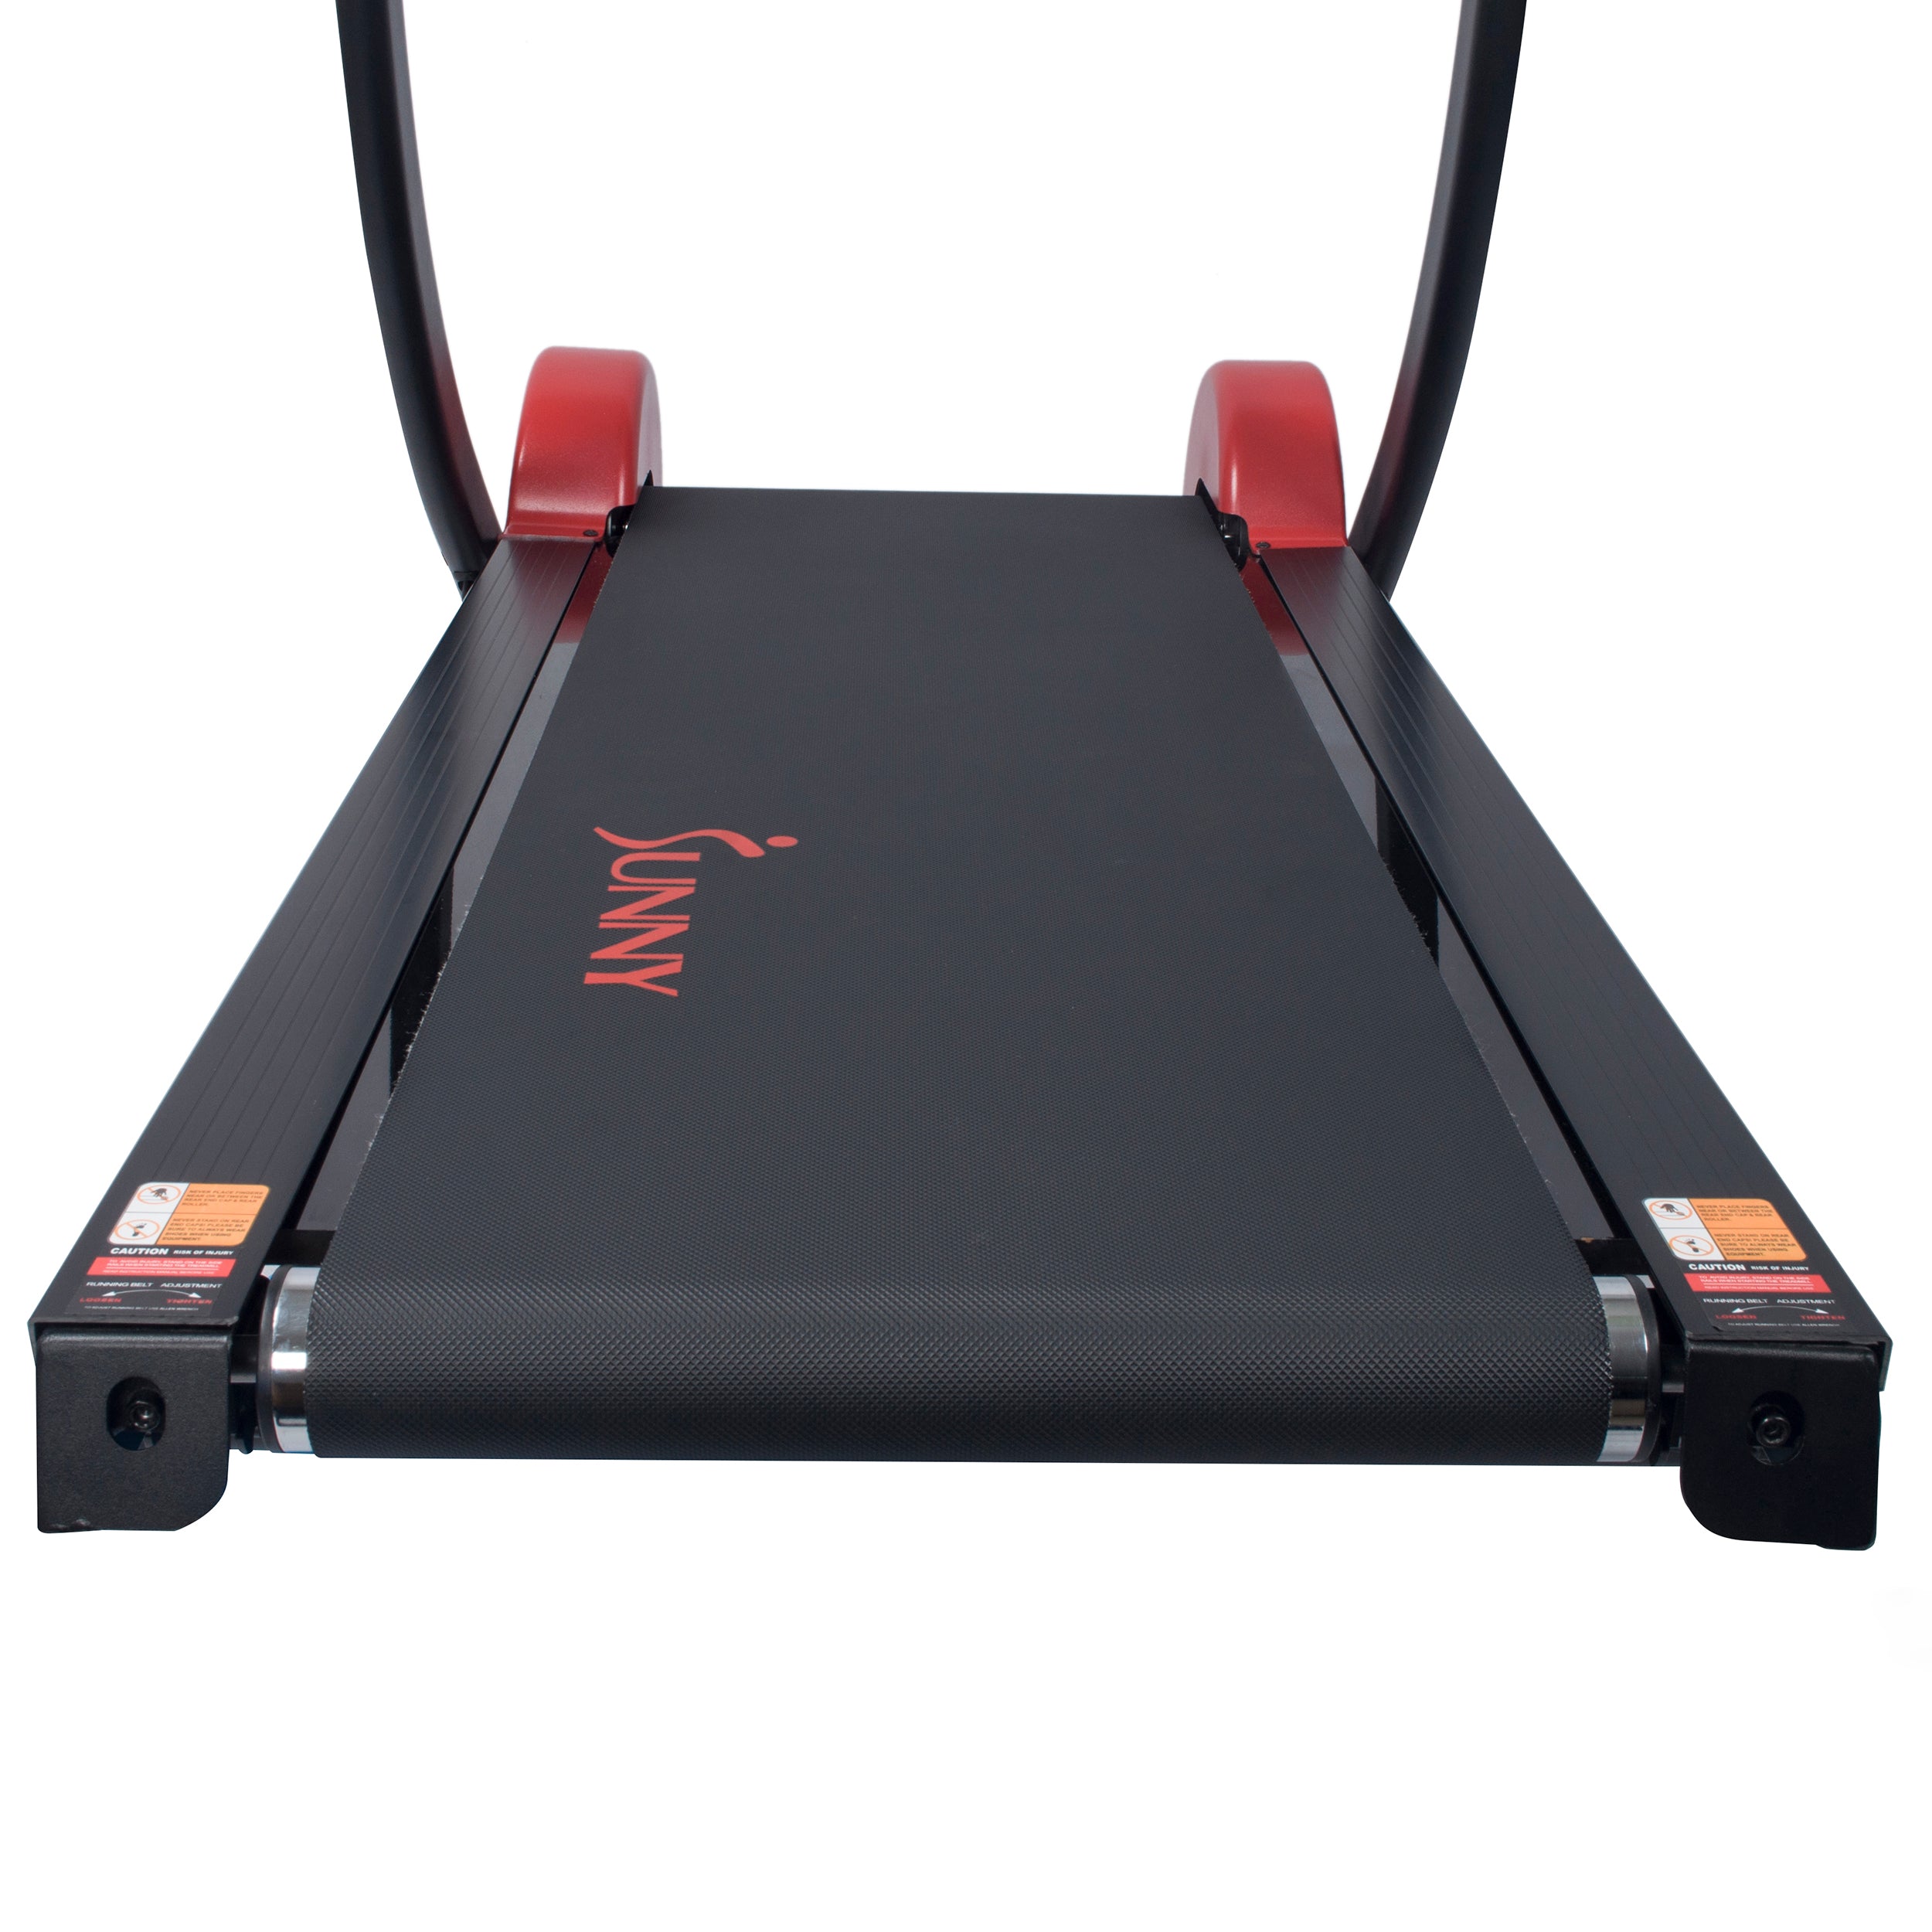 sunny-health-fitness-treadmills-sunny-health-fitness-cardio-trainer-manual-treadmill-adjustable-incline-300+-lbs-SF-T7878-deck